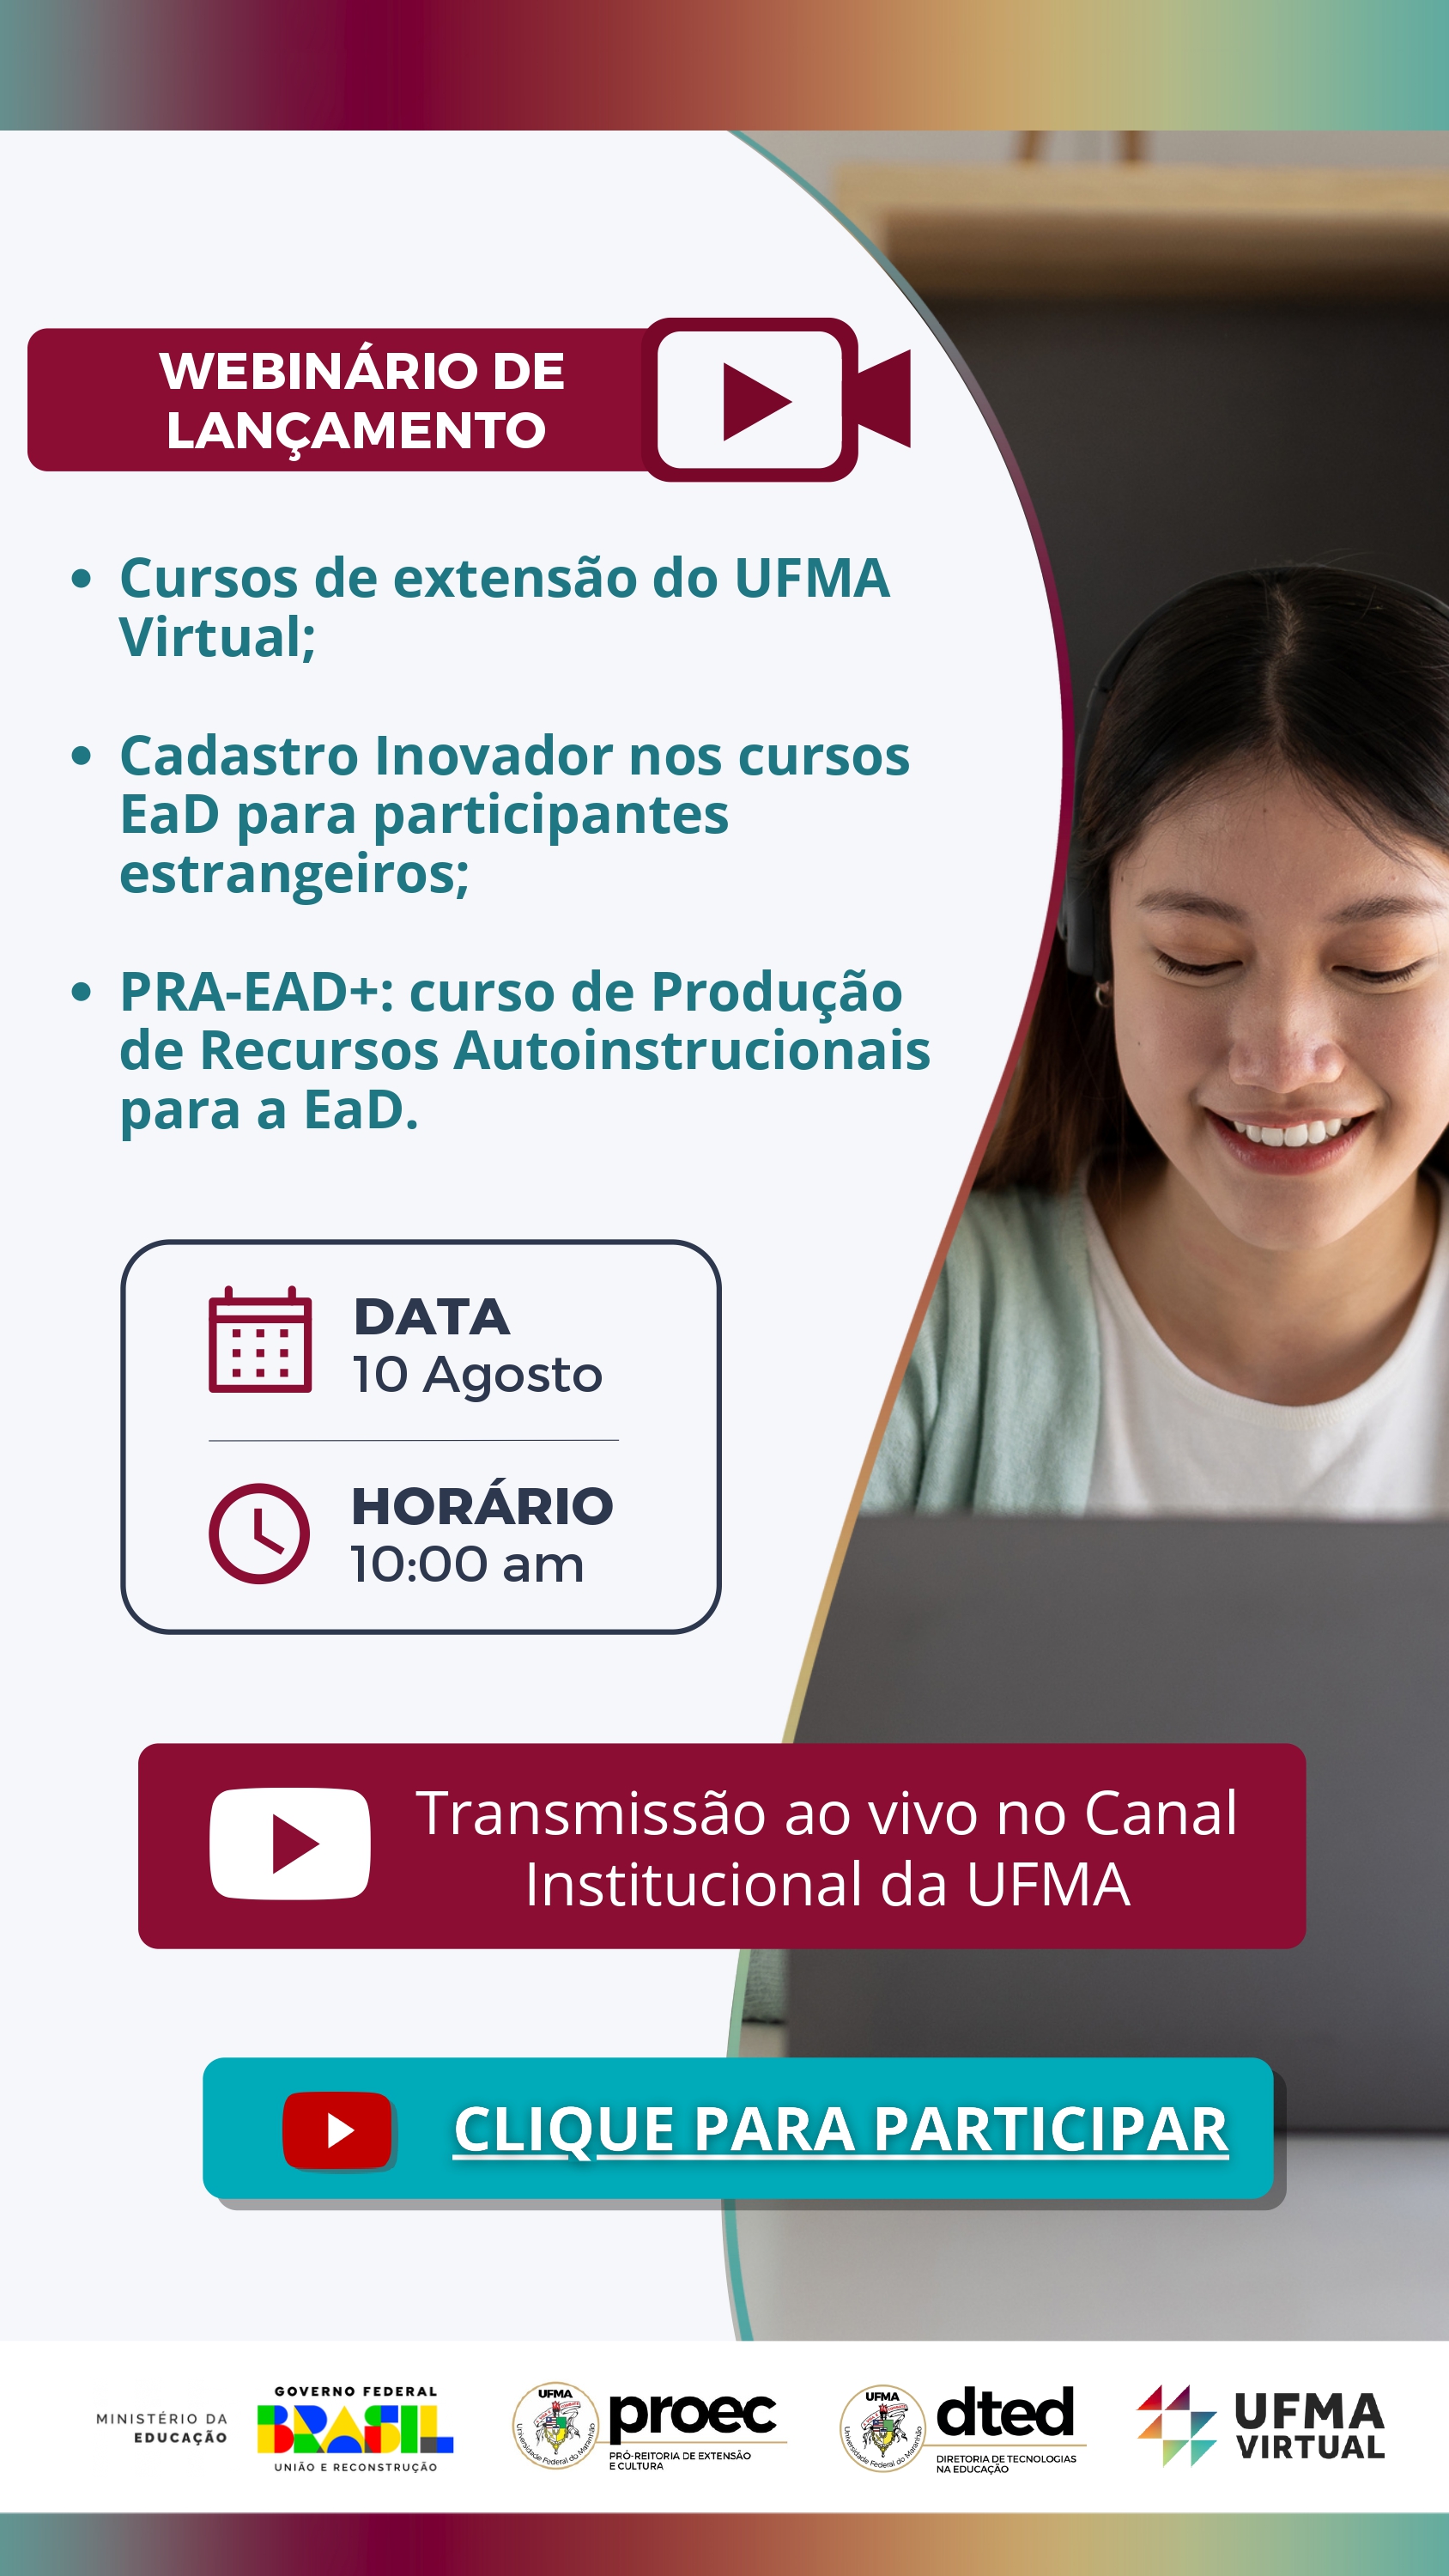 UFMA Virtual lança nessa quinta-feira, 10, cursos on-line exclusivos e Cadastro Inovador nos cursos EaD para participantes estrangeiros